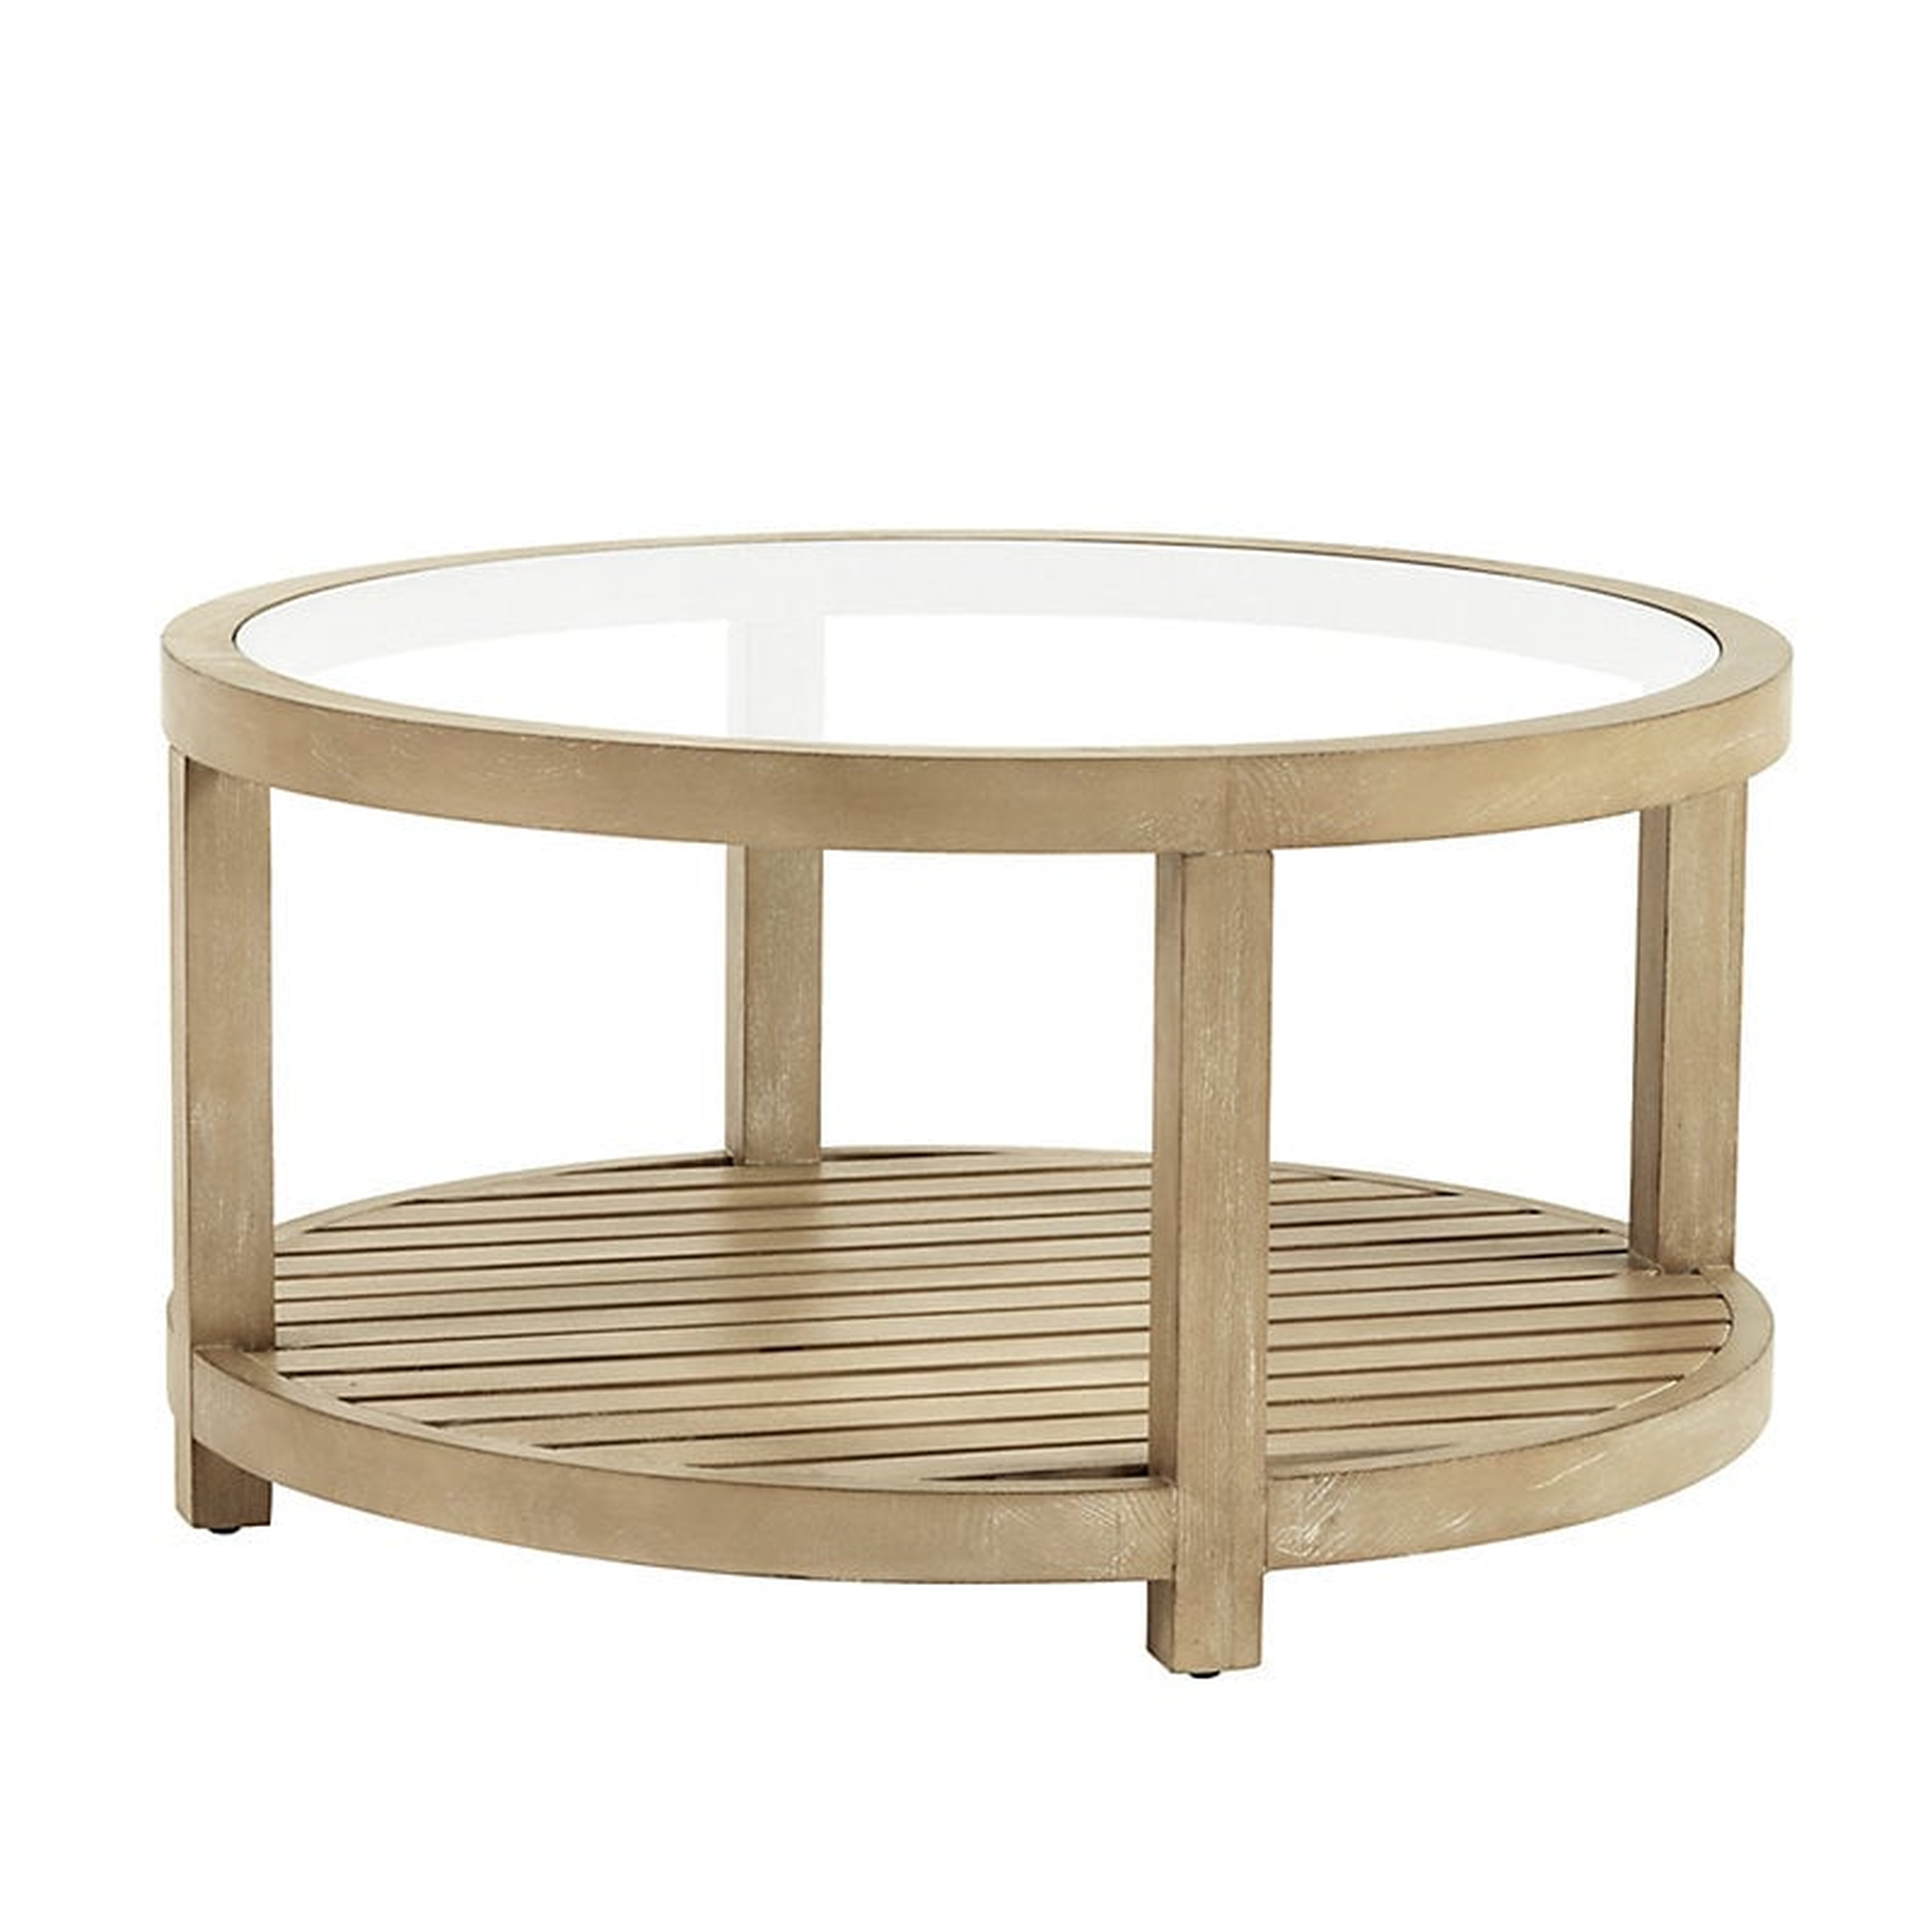 Thomas Round Coffee Table - Ballard Designs